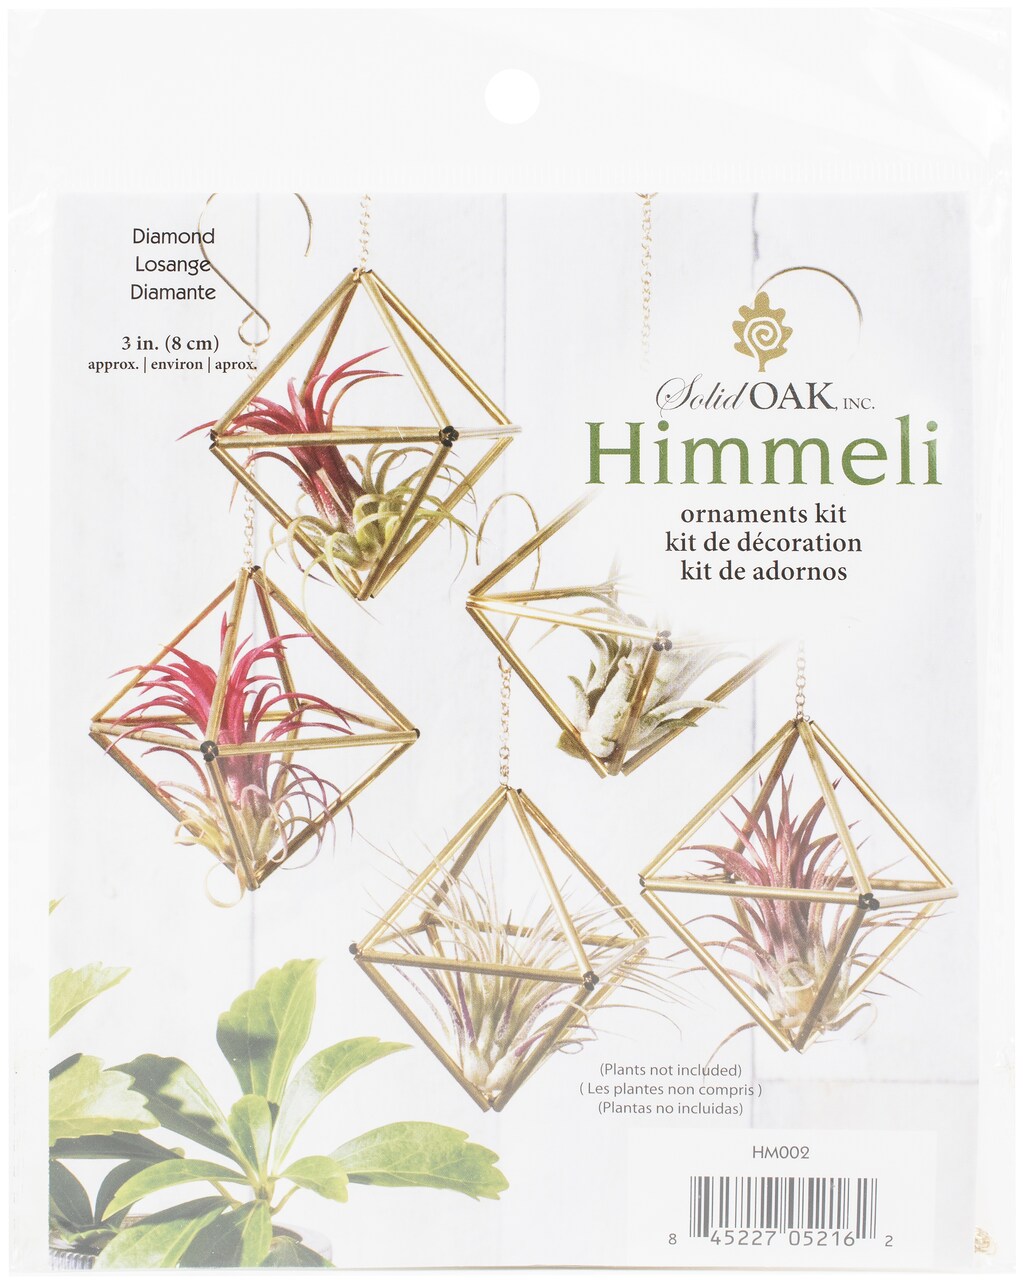 Solid Oak Himmeli Ornaments Kit